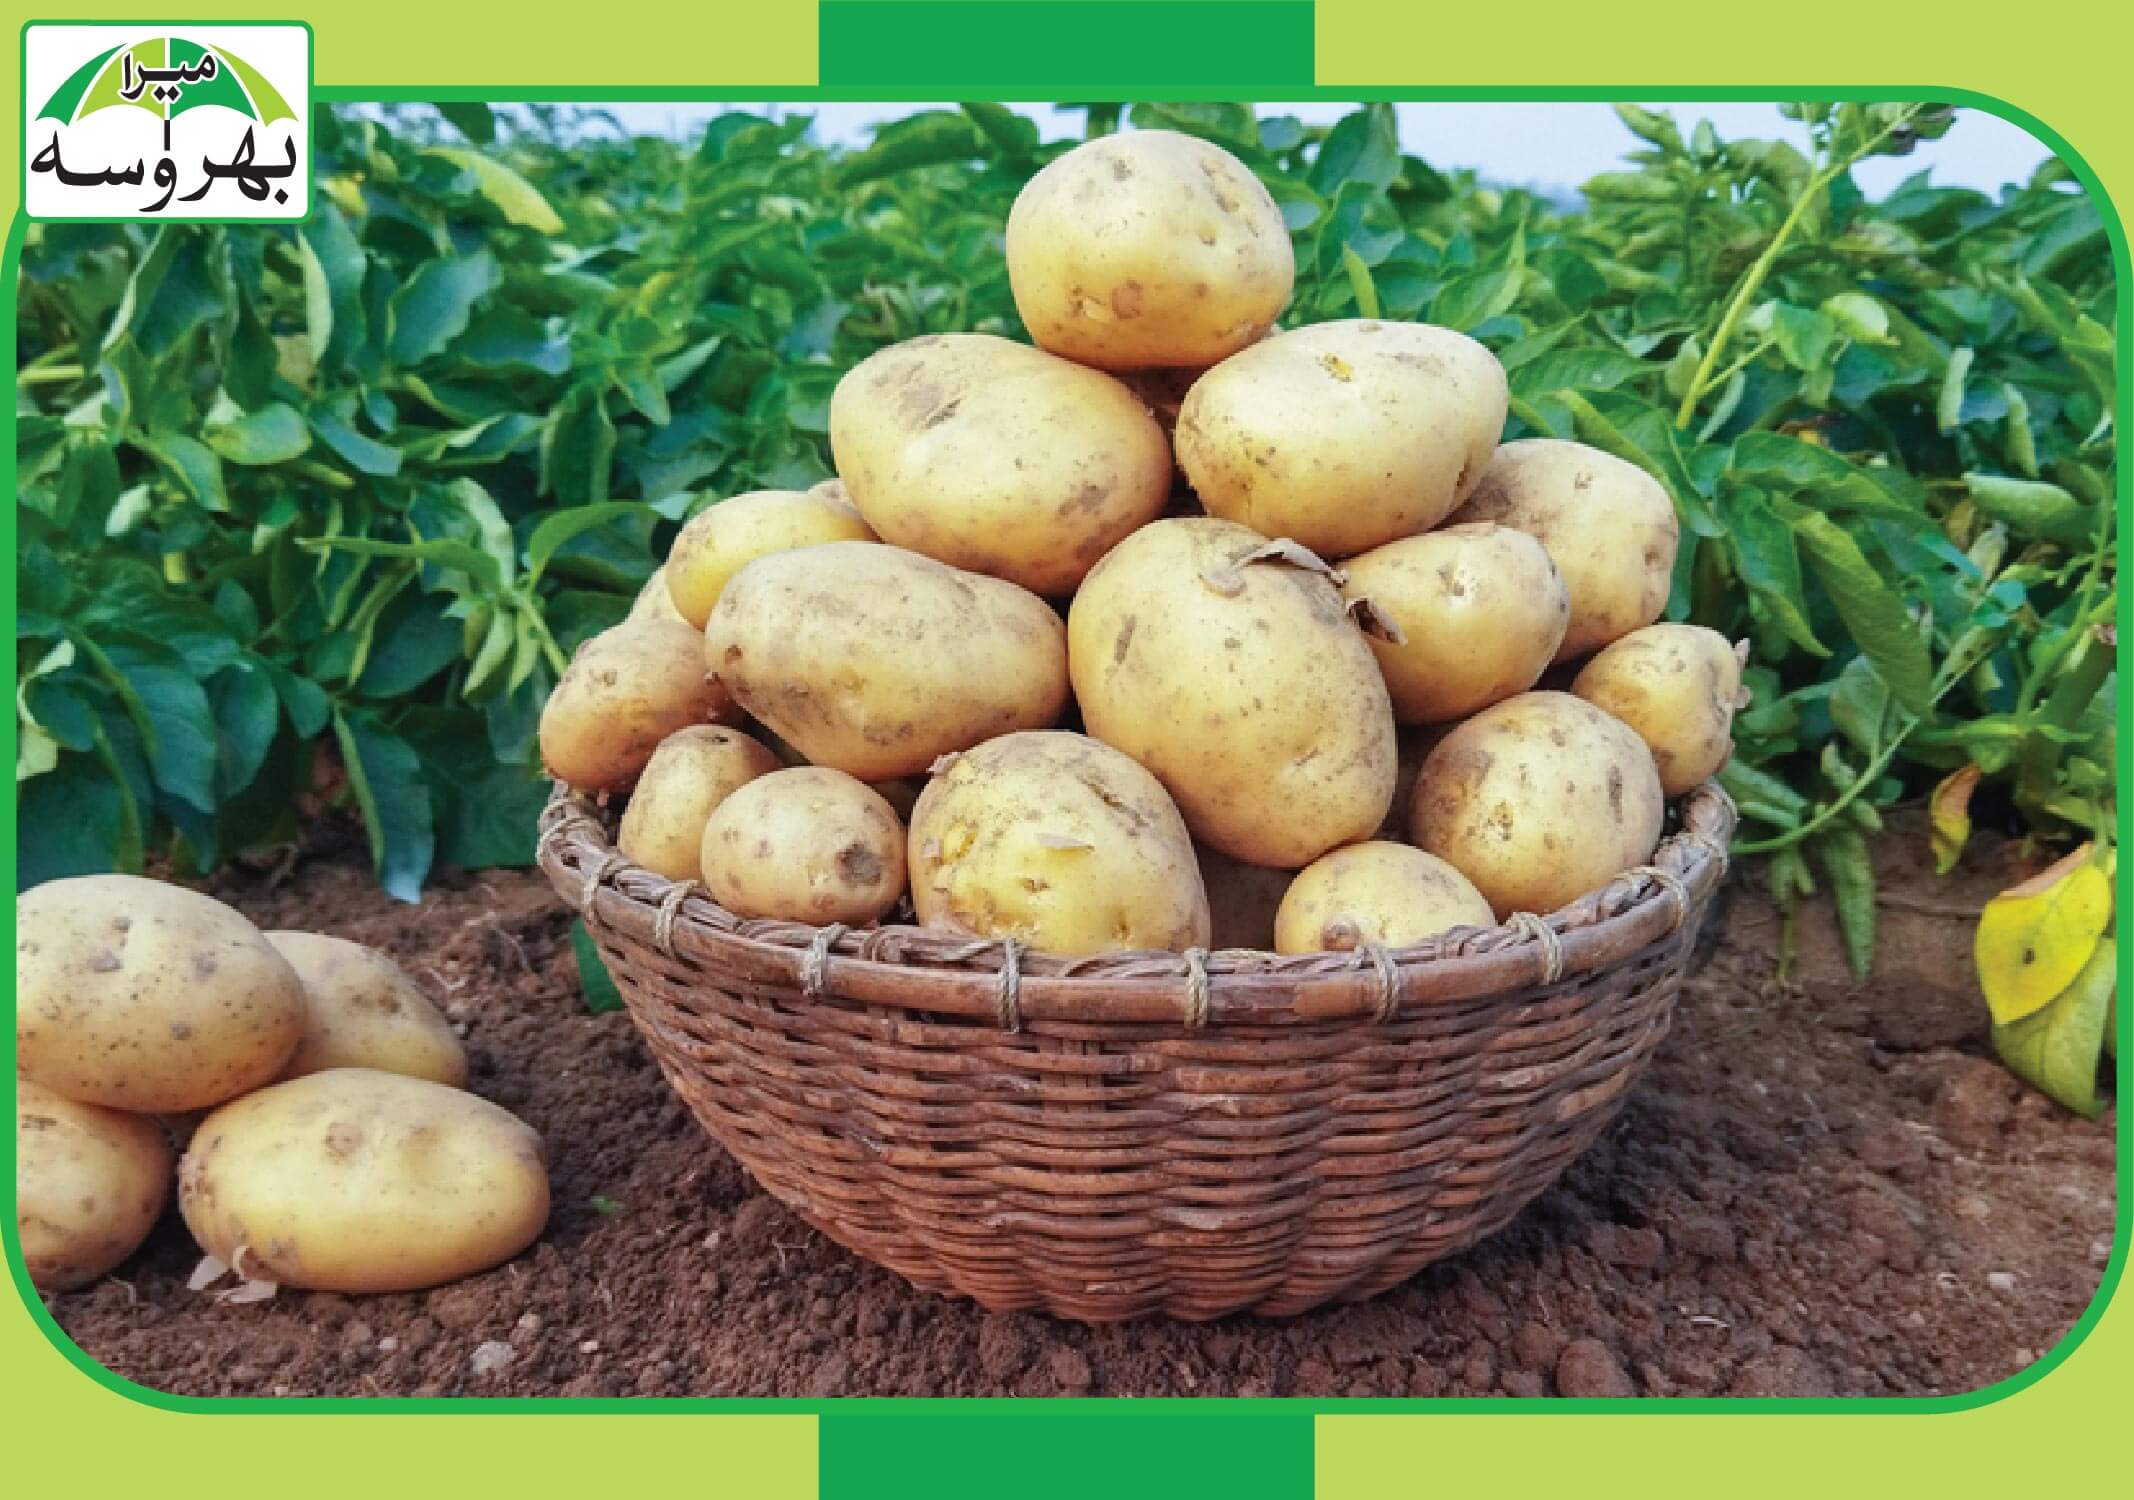 potato feature image 01